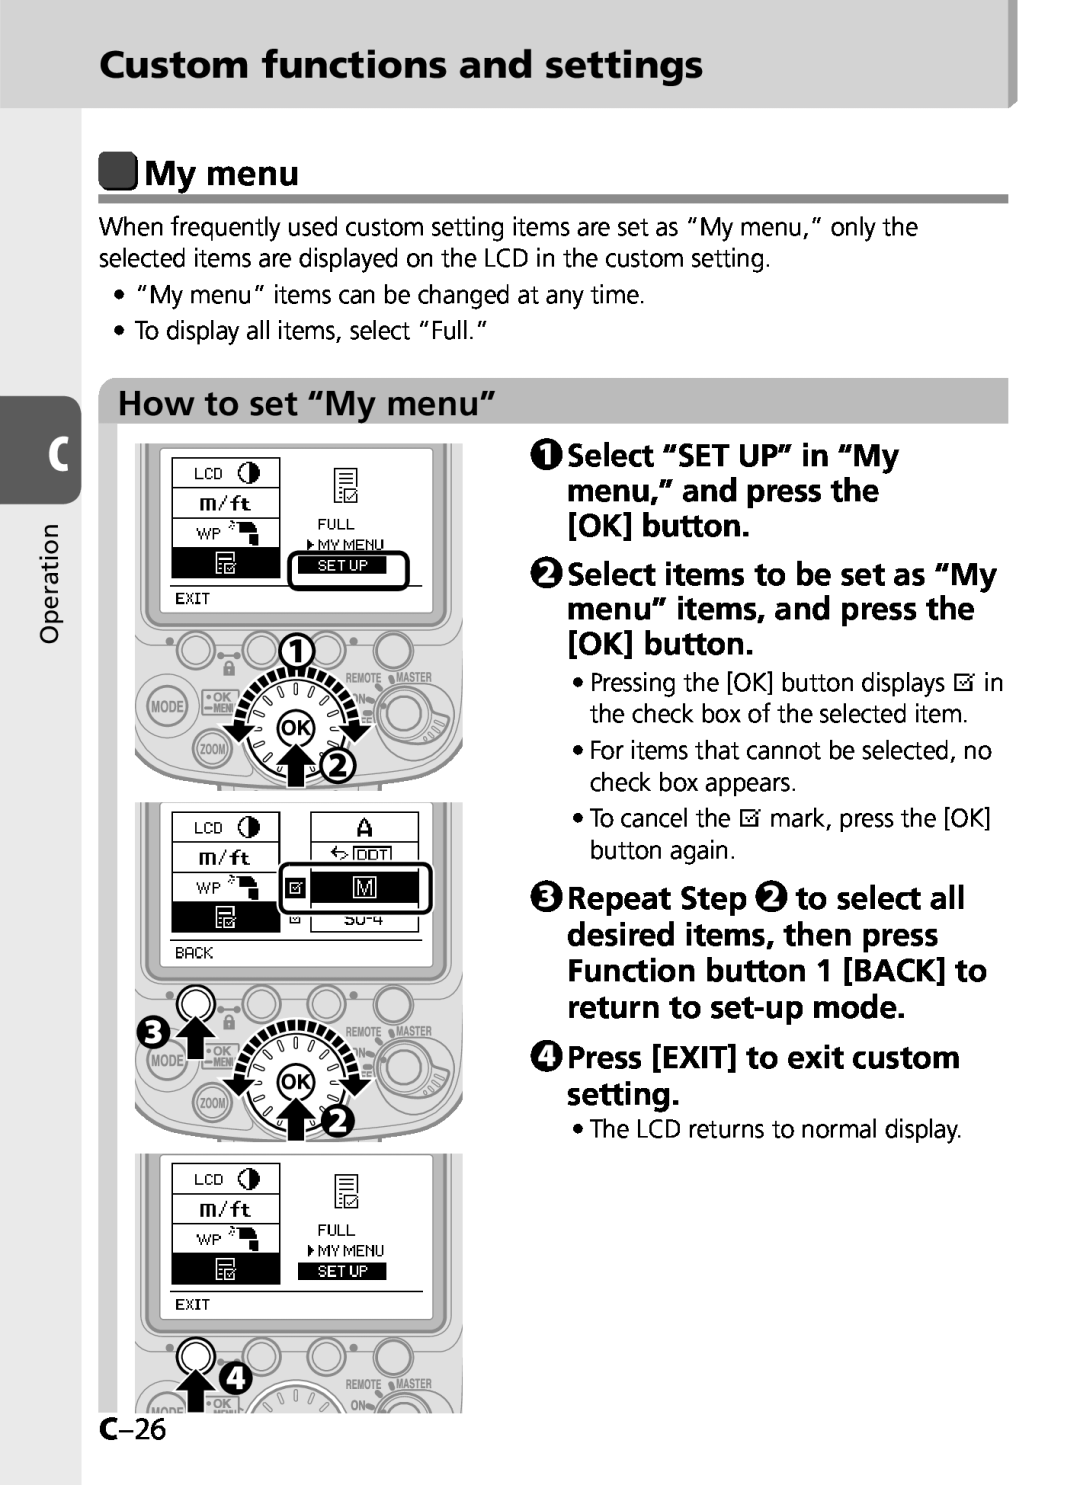 Univex SB-900 user manual How to set “My menu”, Press EXIT to exit custom setting, Custom functions and settings 